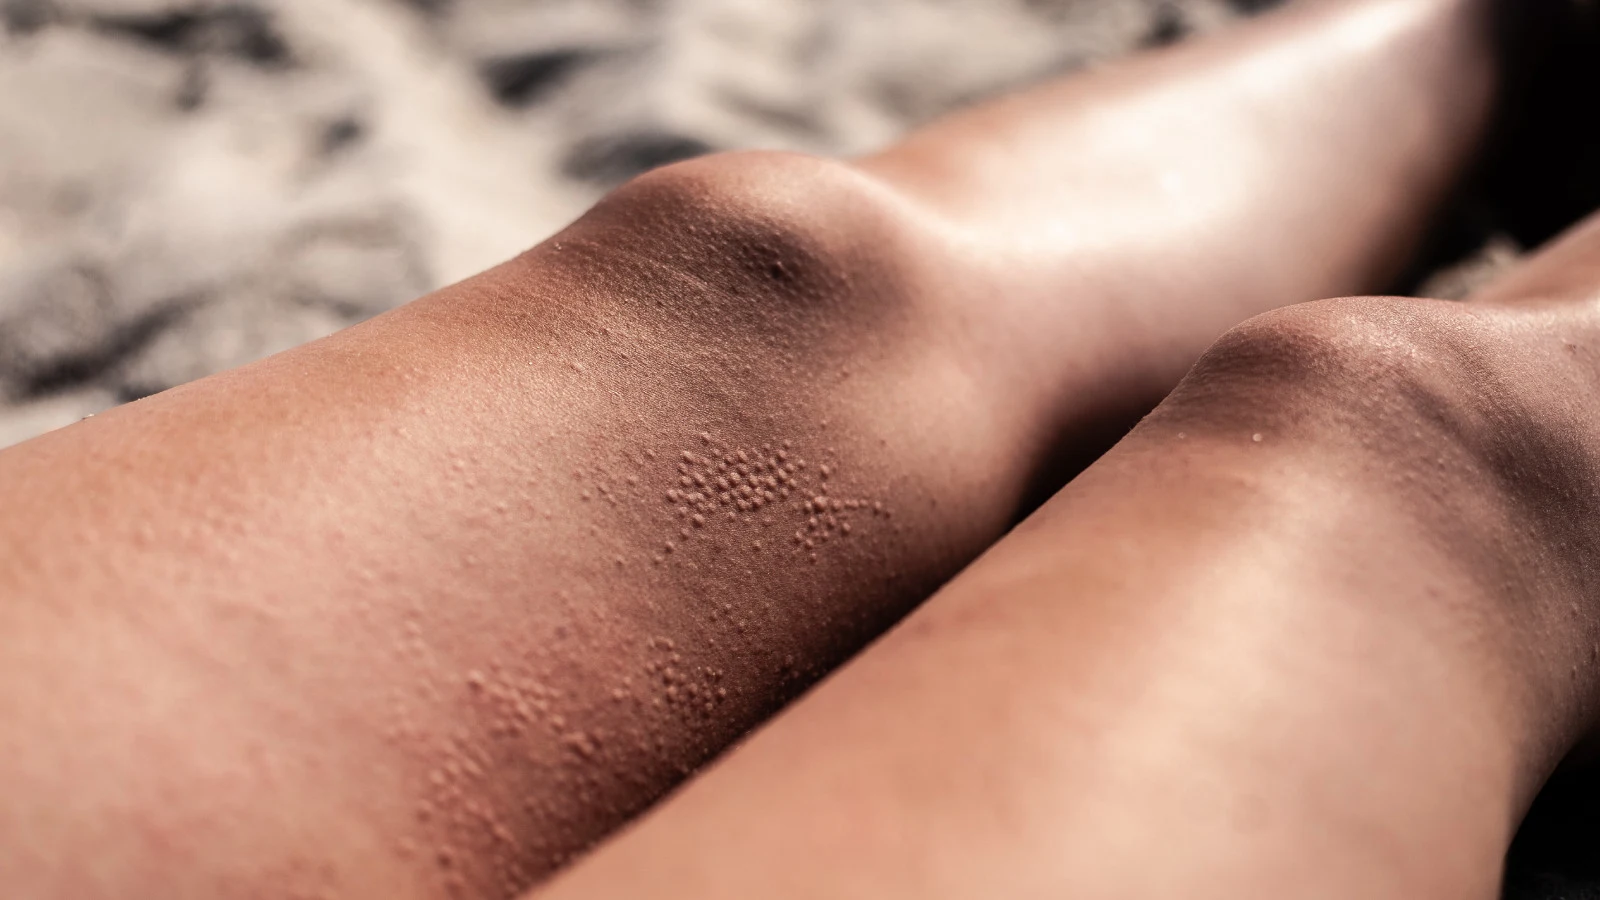 Legs covered in rash